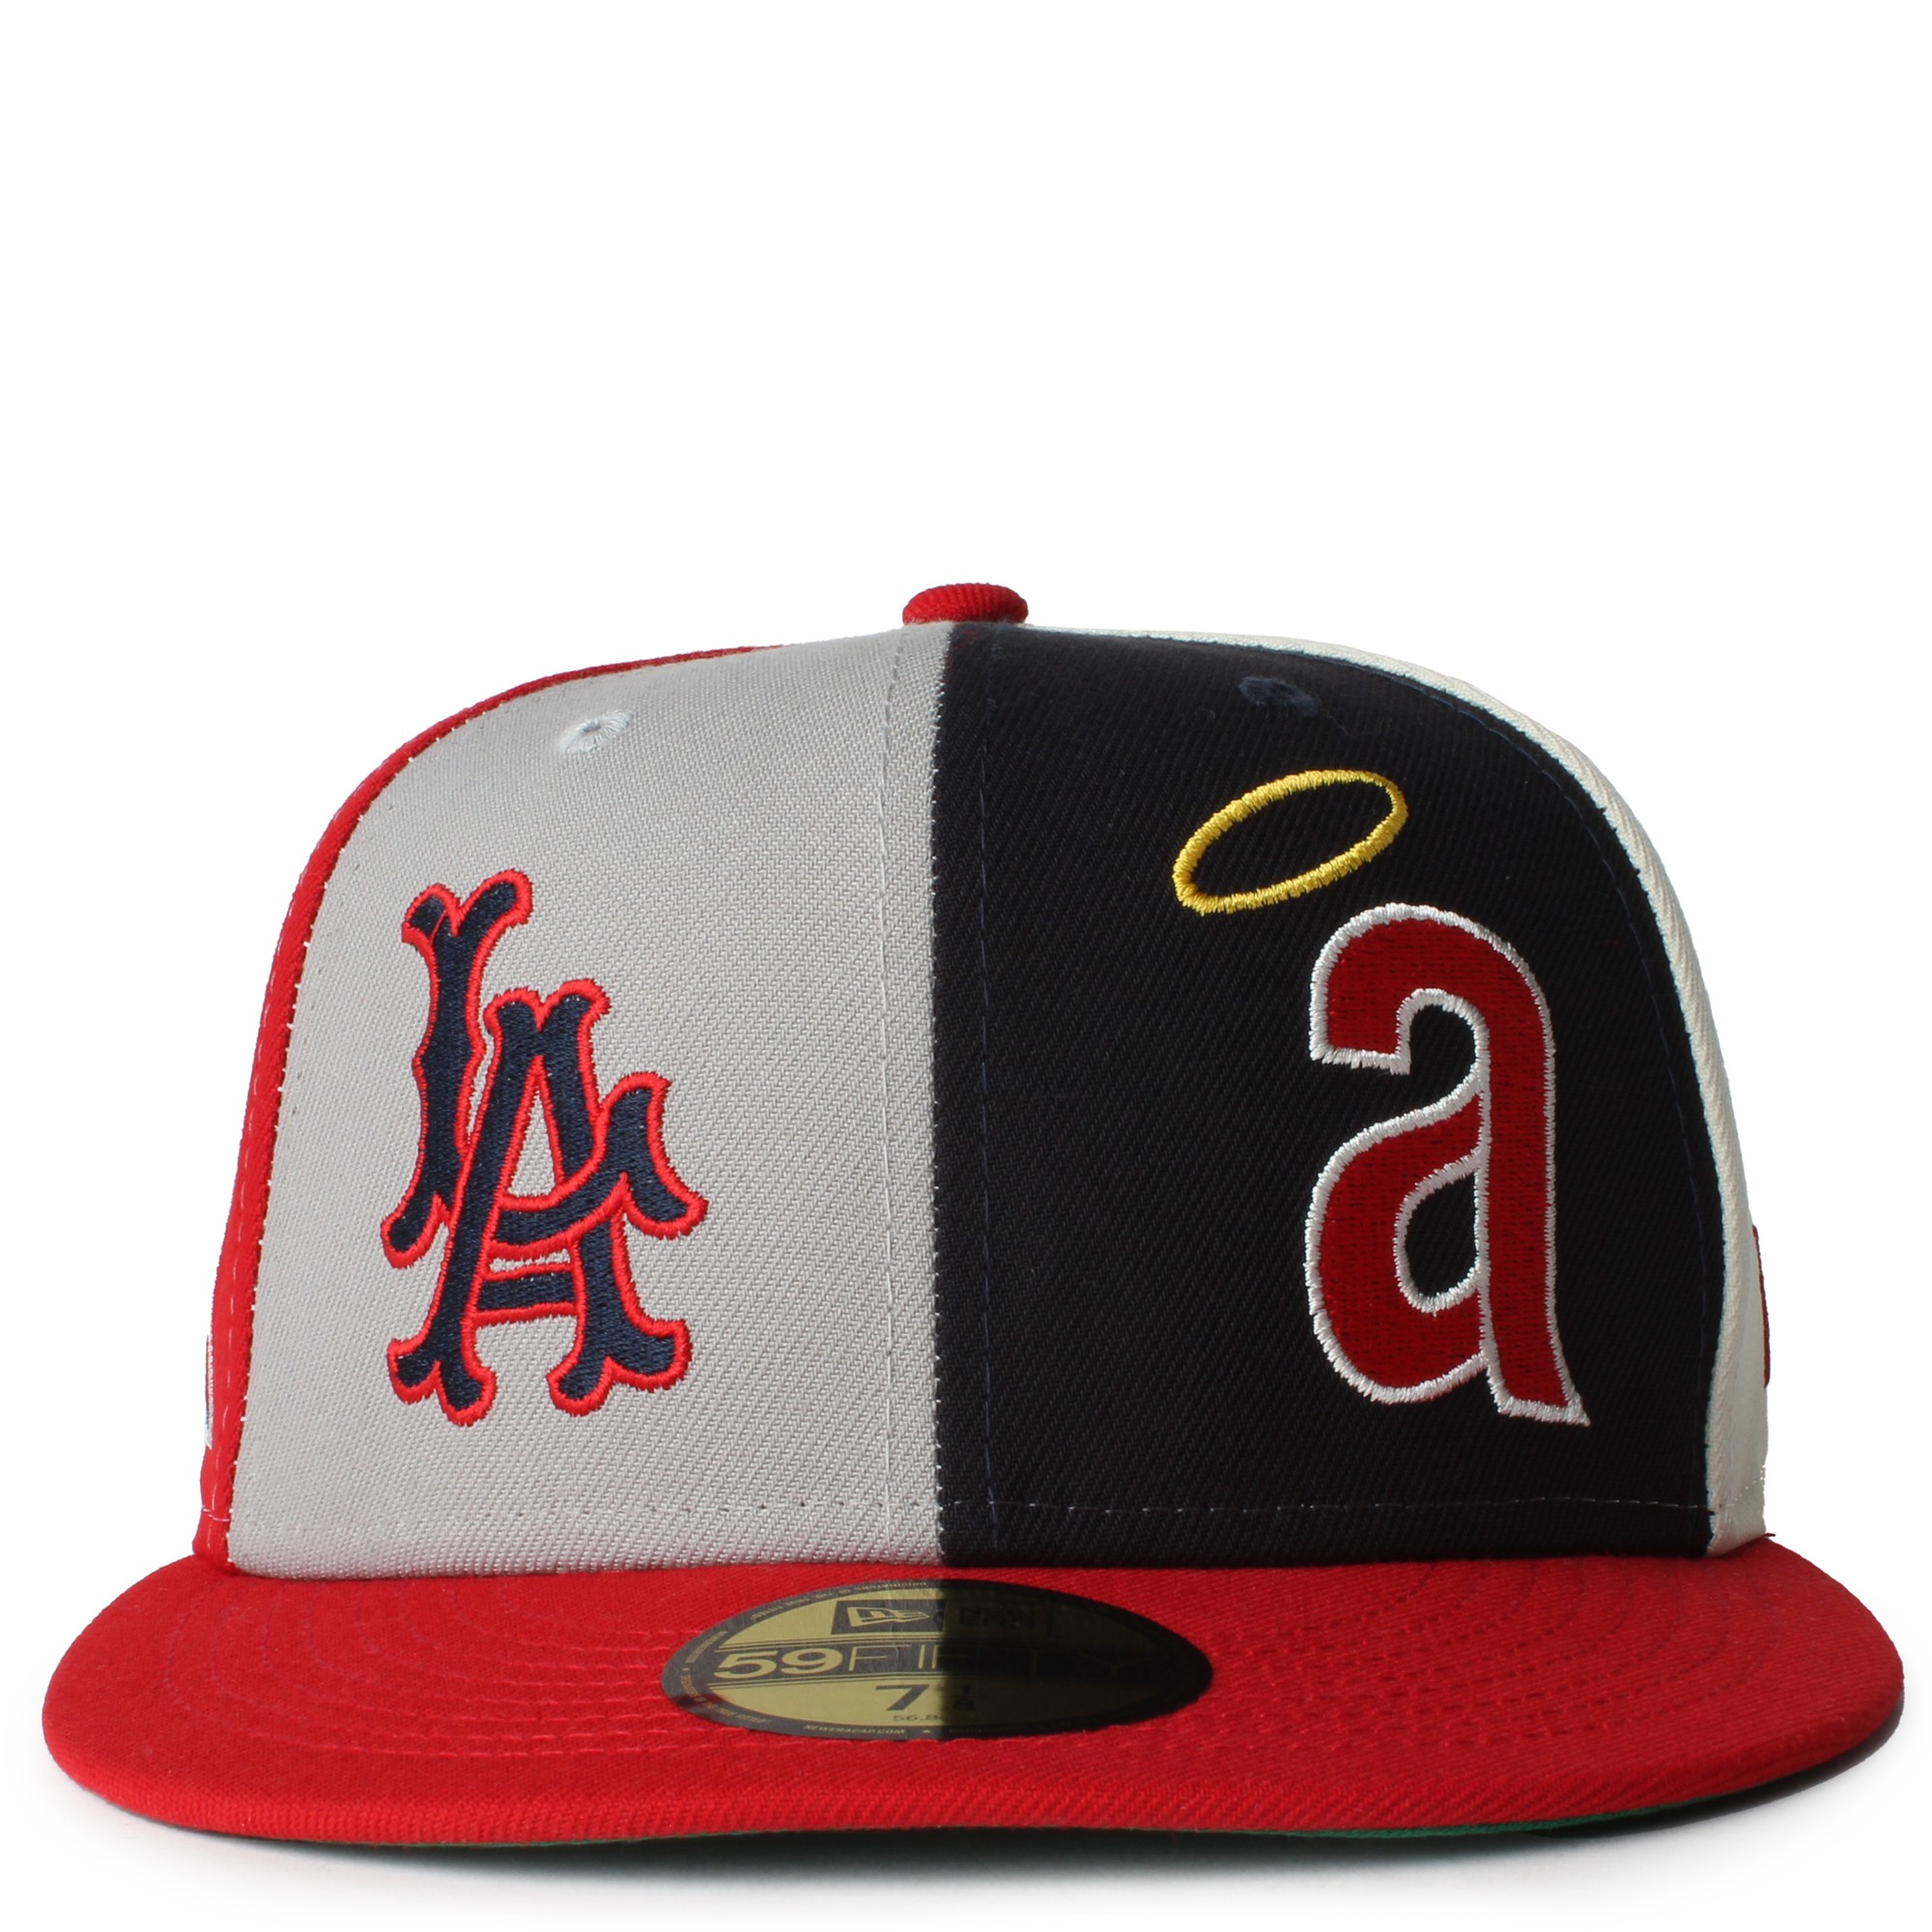 Houston Astros PINWHEEL White-Black Fitted Hat by New Era